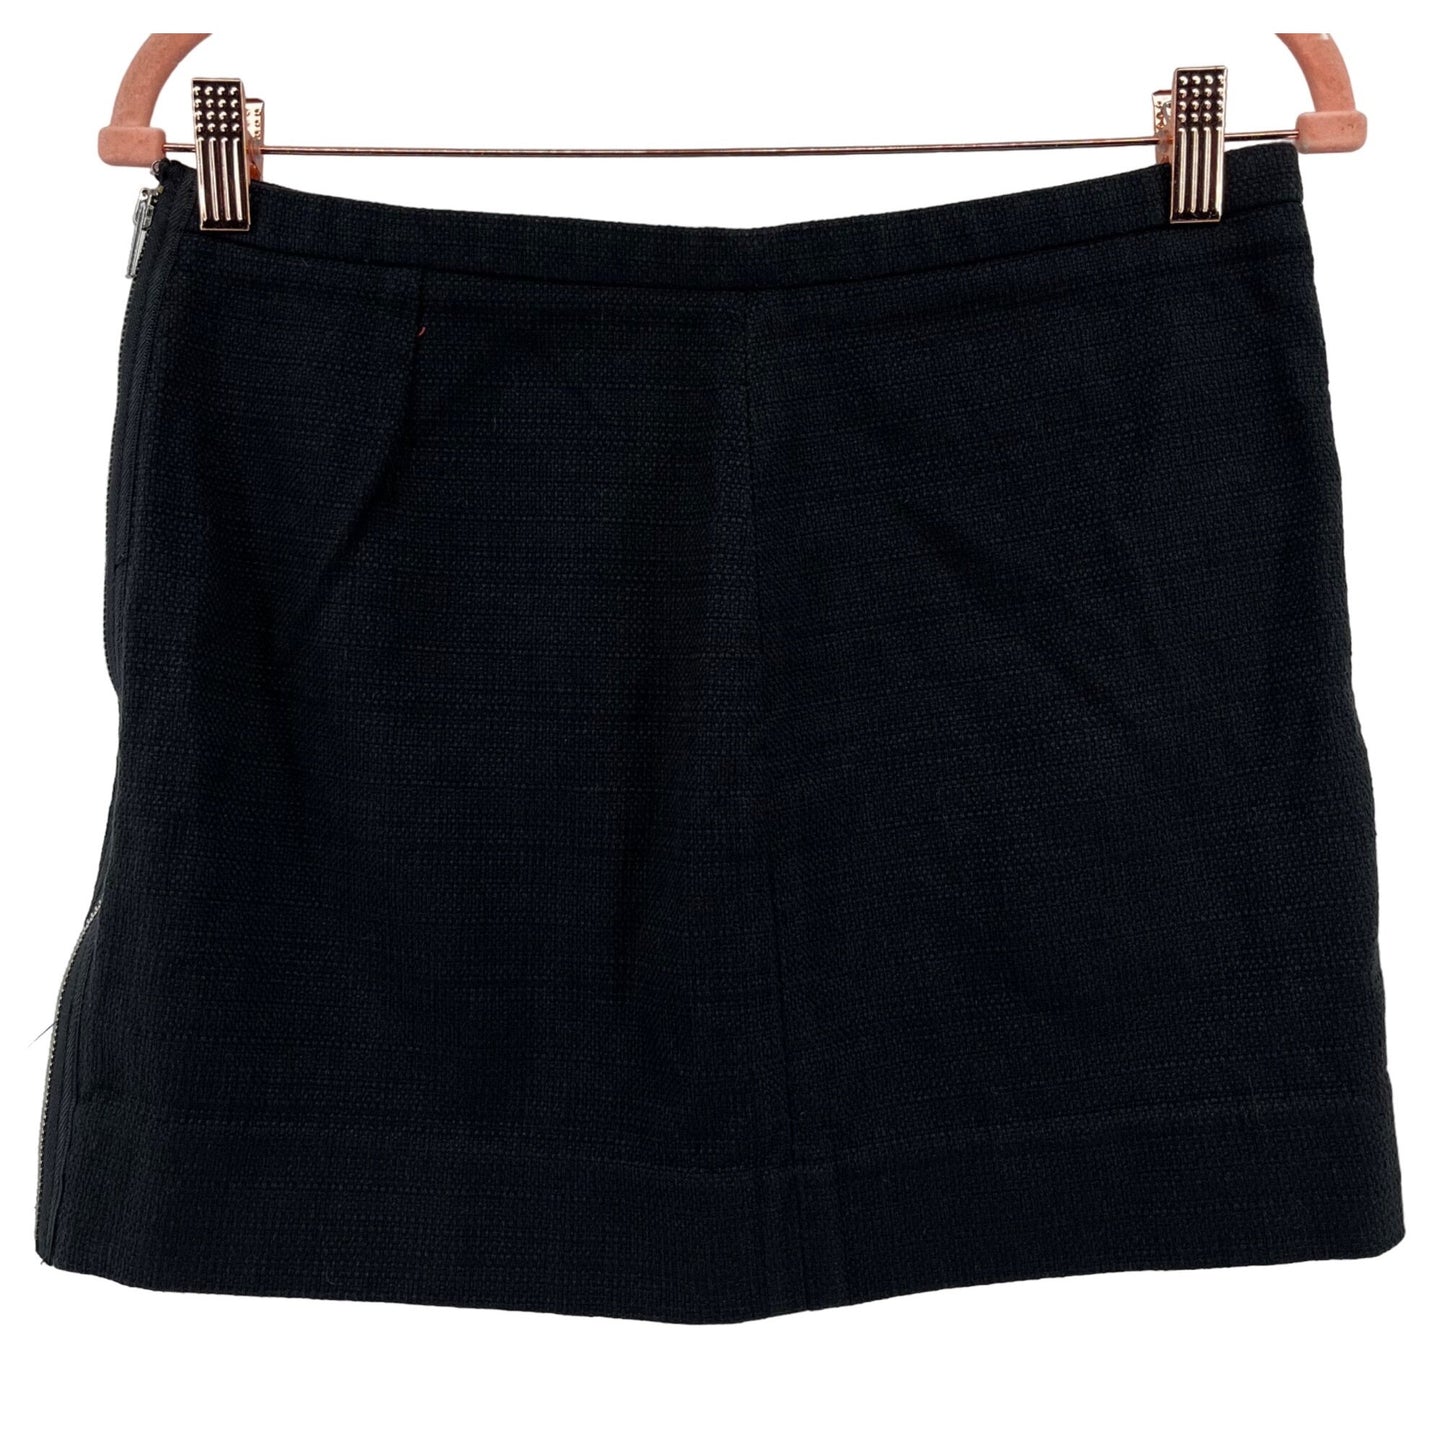 GAP Women's Size 4 Black Mini Skirt